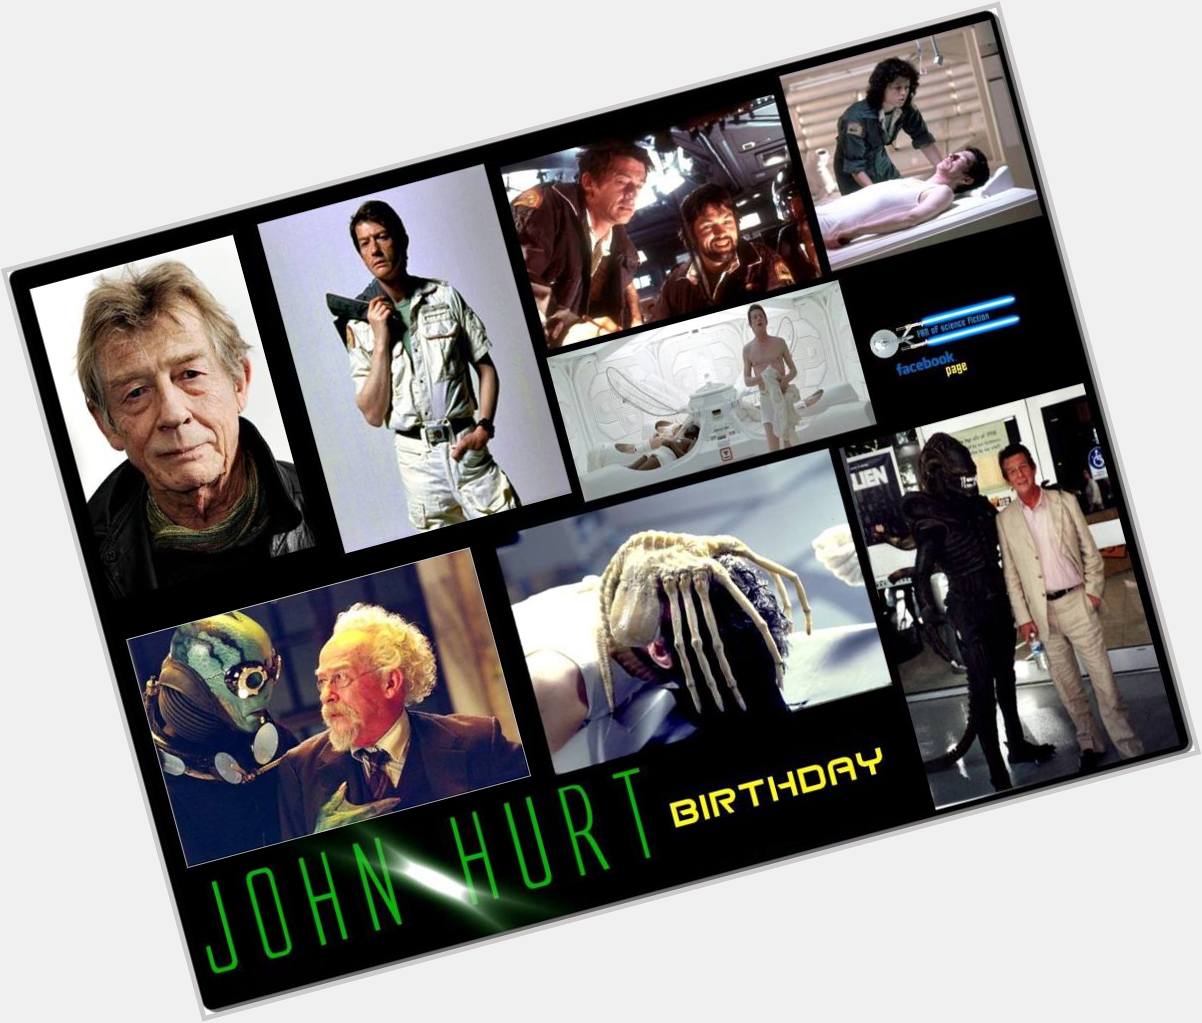 1-22 Happy birthday to John Hurt.  